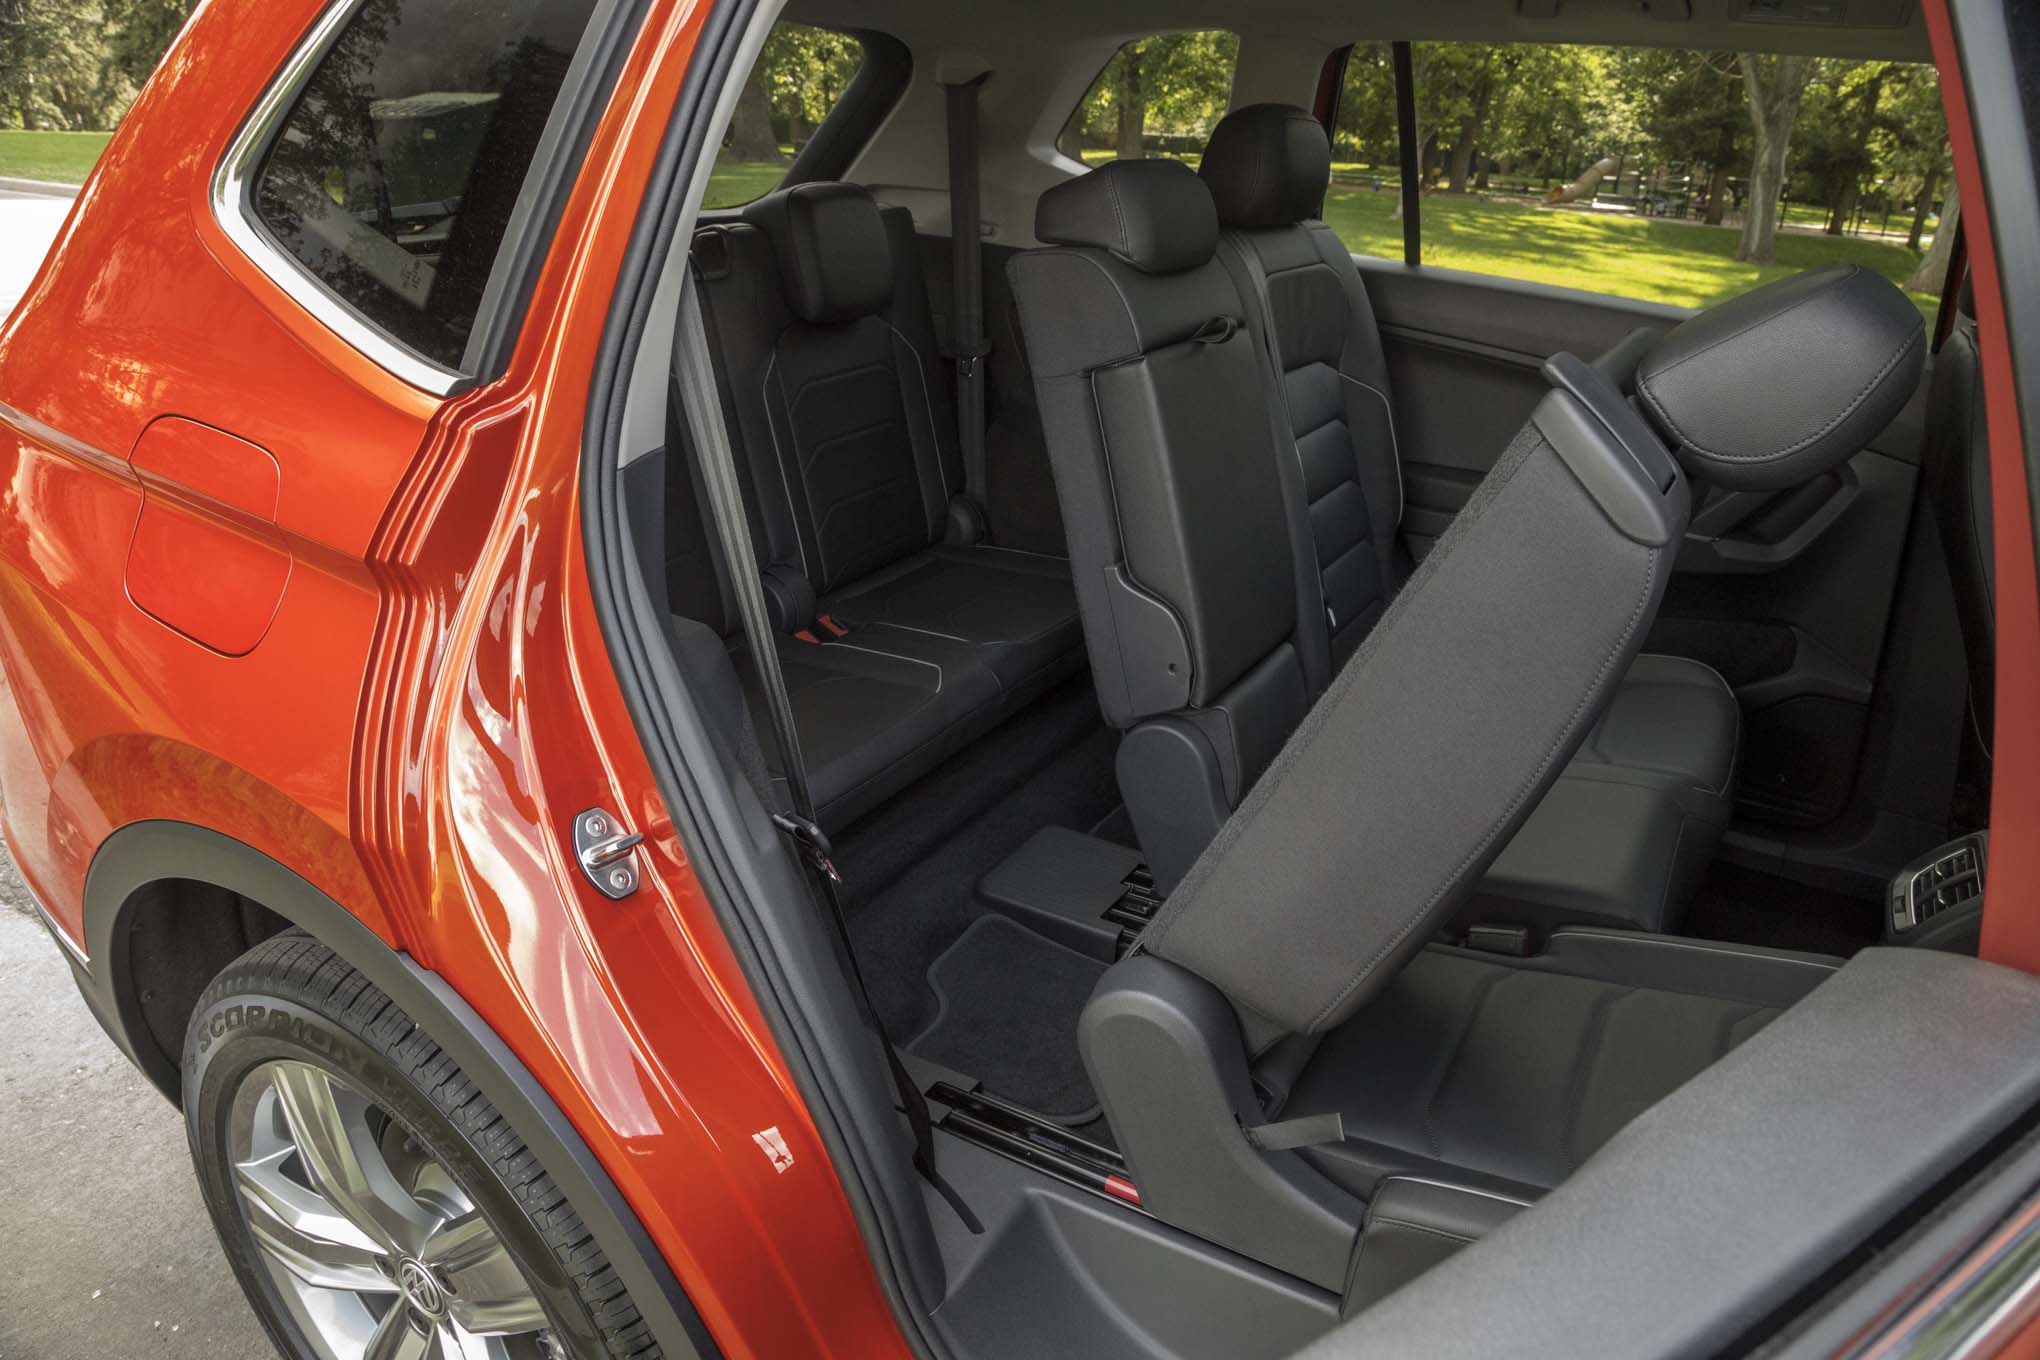 2018-Volkswagen-Tiguan-SEL-Premium-rear-interior-seats.jpg